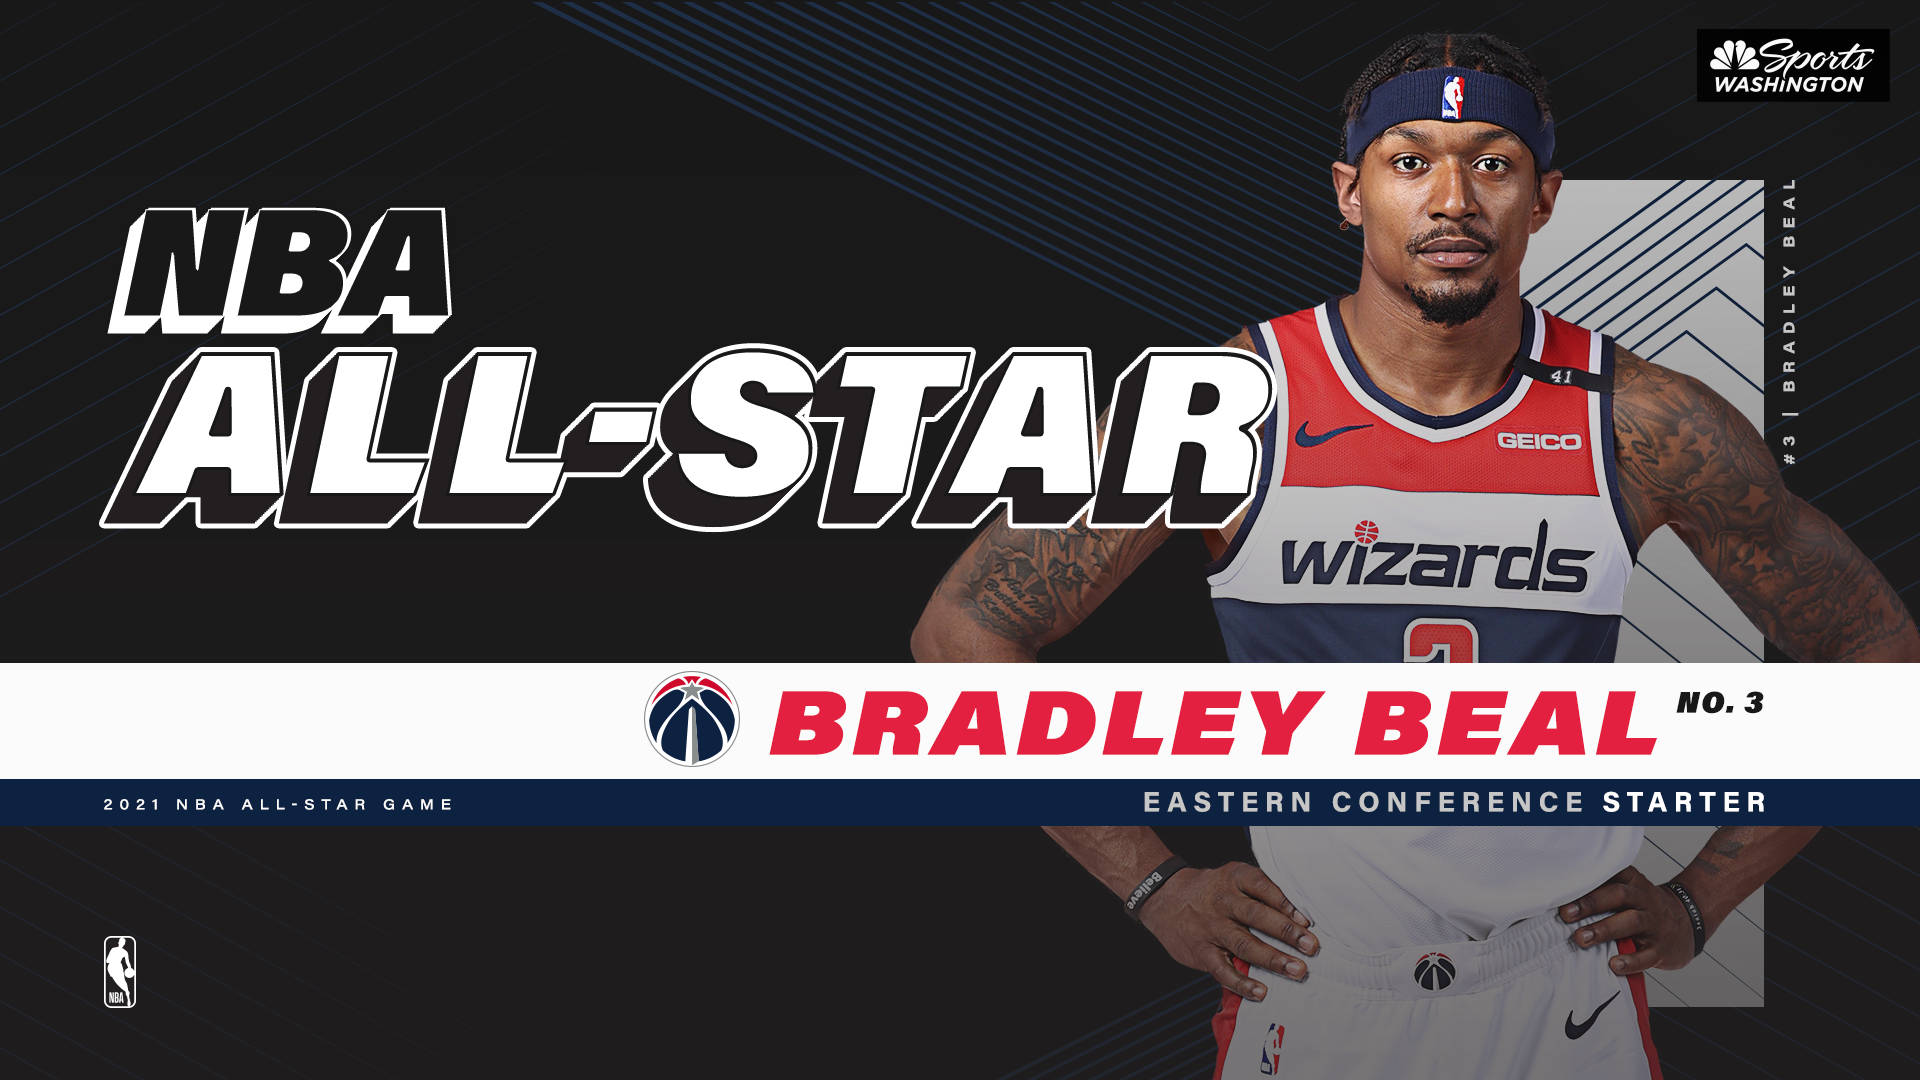 Bradleybeal, Nba All-star-spieler. Wallpaper